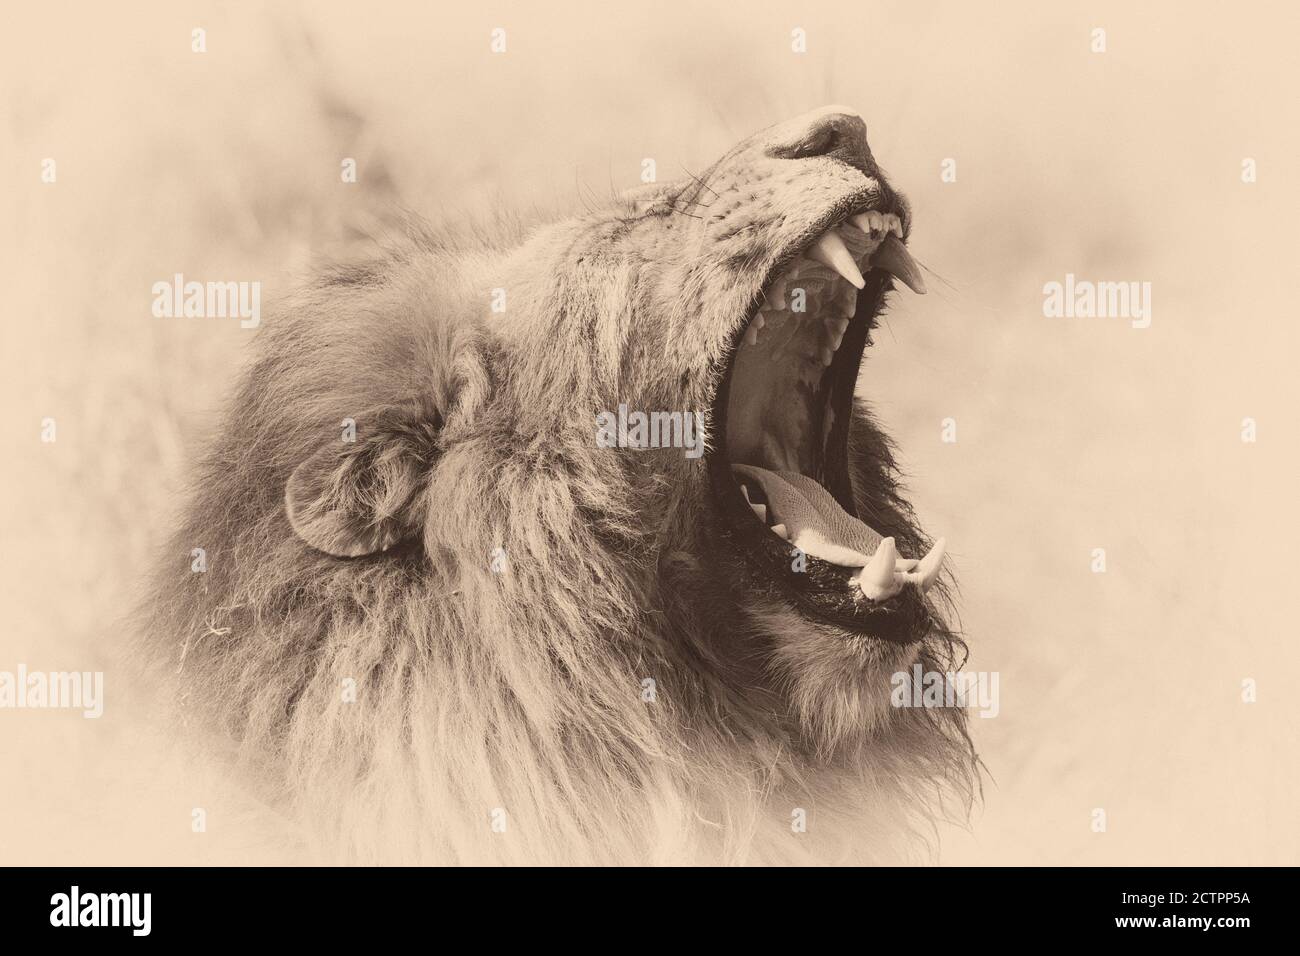 Lion roaring, Sepia toned Stock Photo